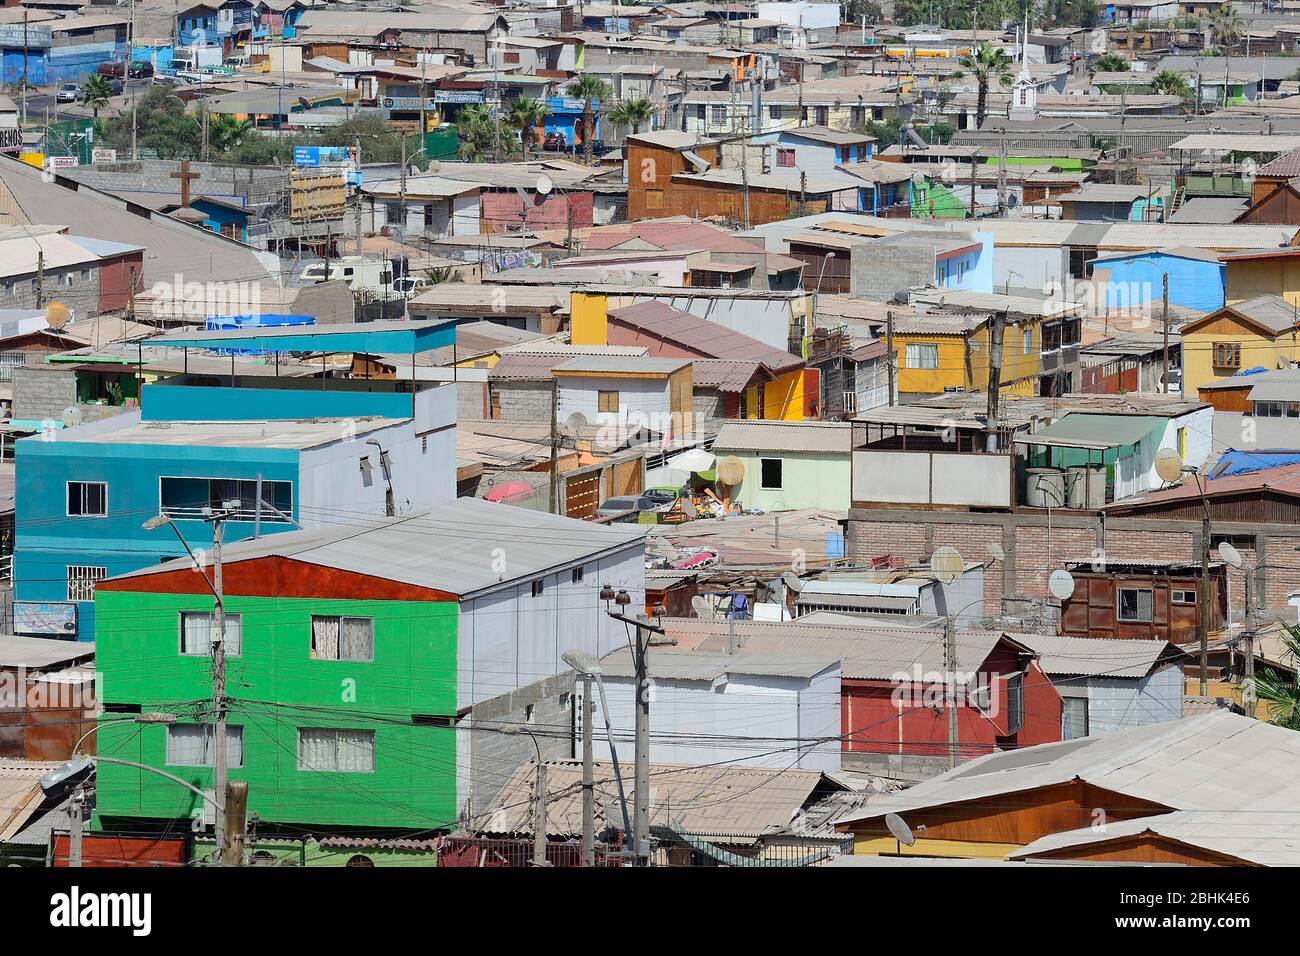 Typical simple houses, Iquique, Tarapaca region, Chile Stock Photo